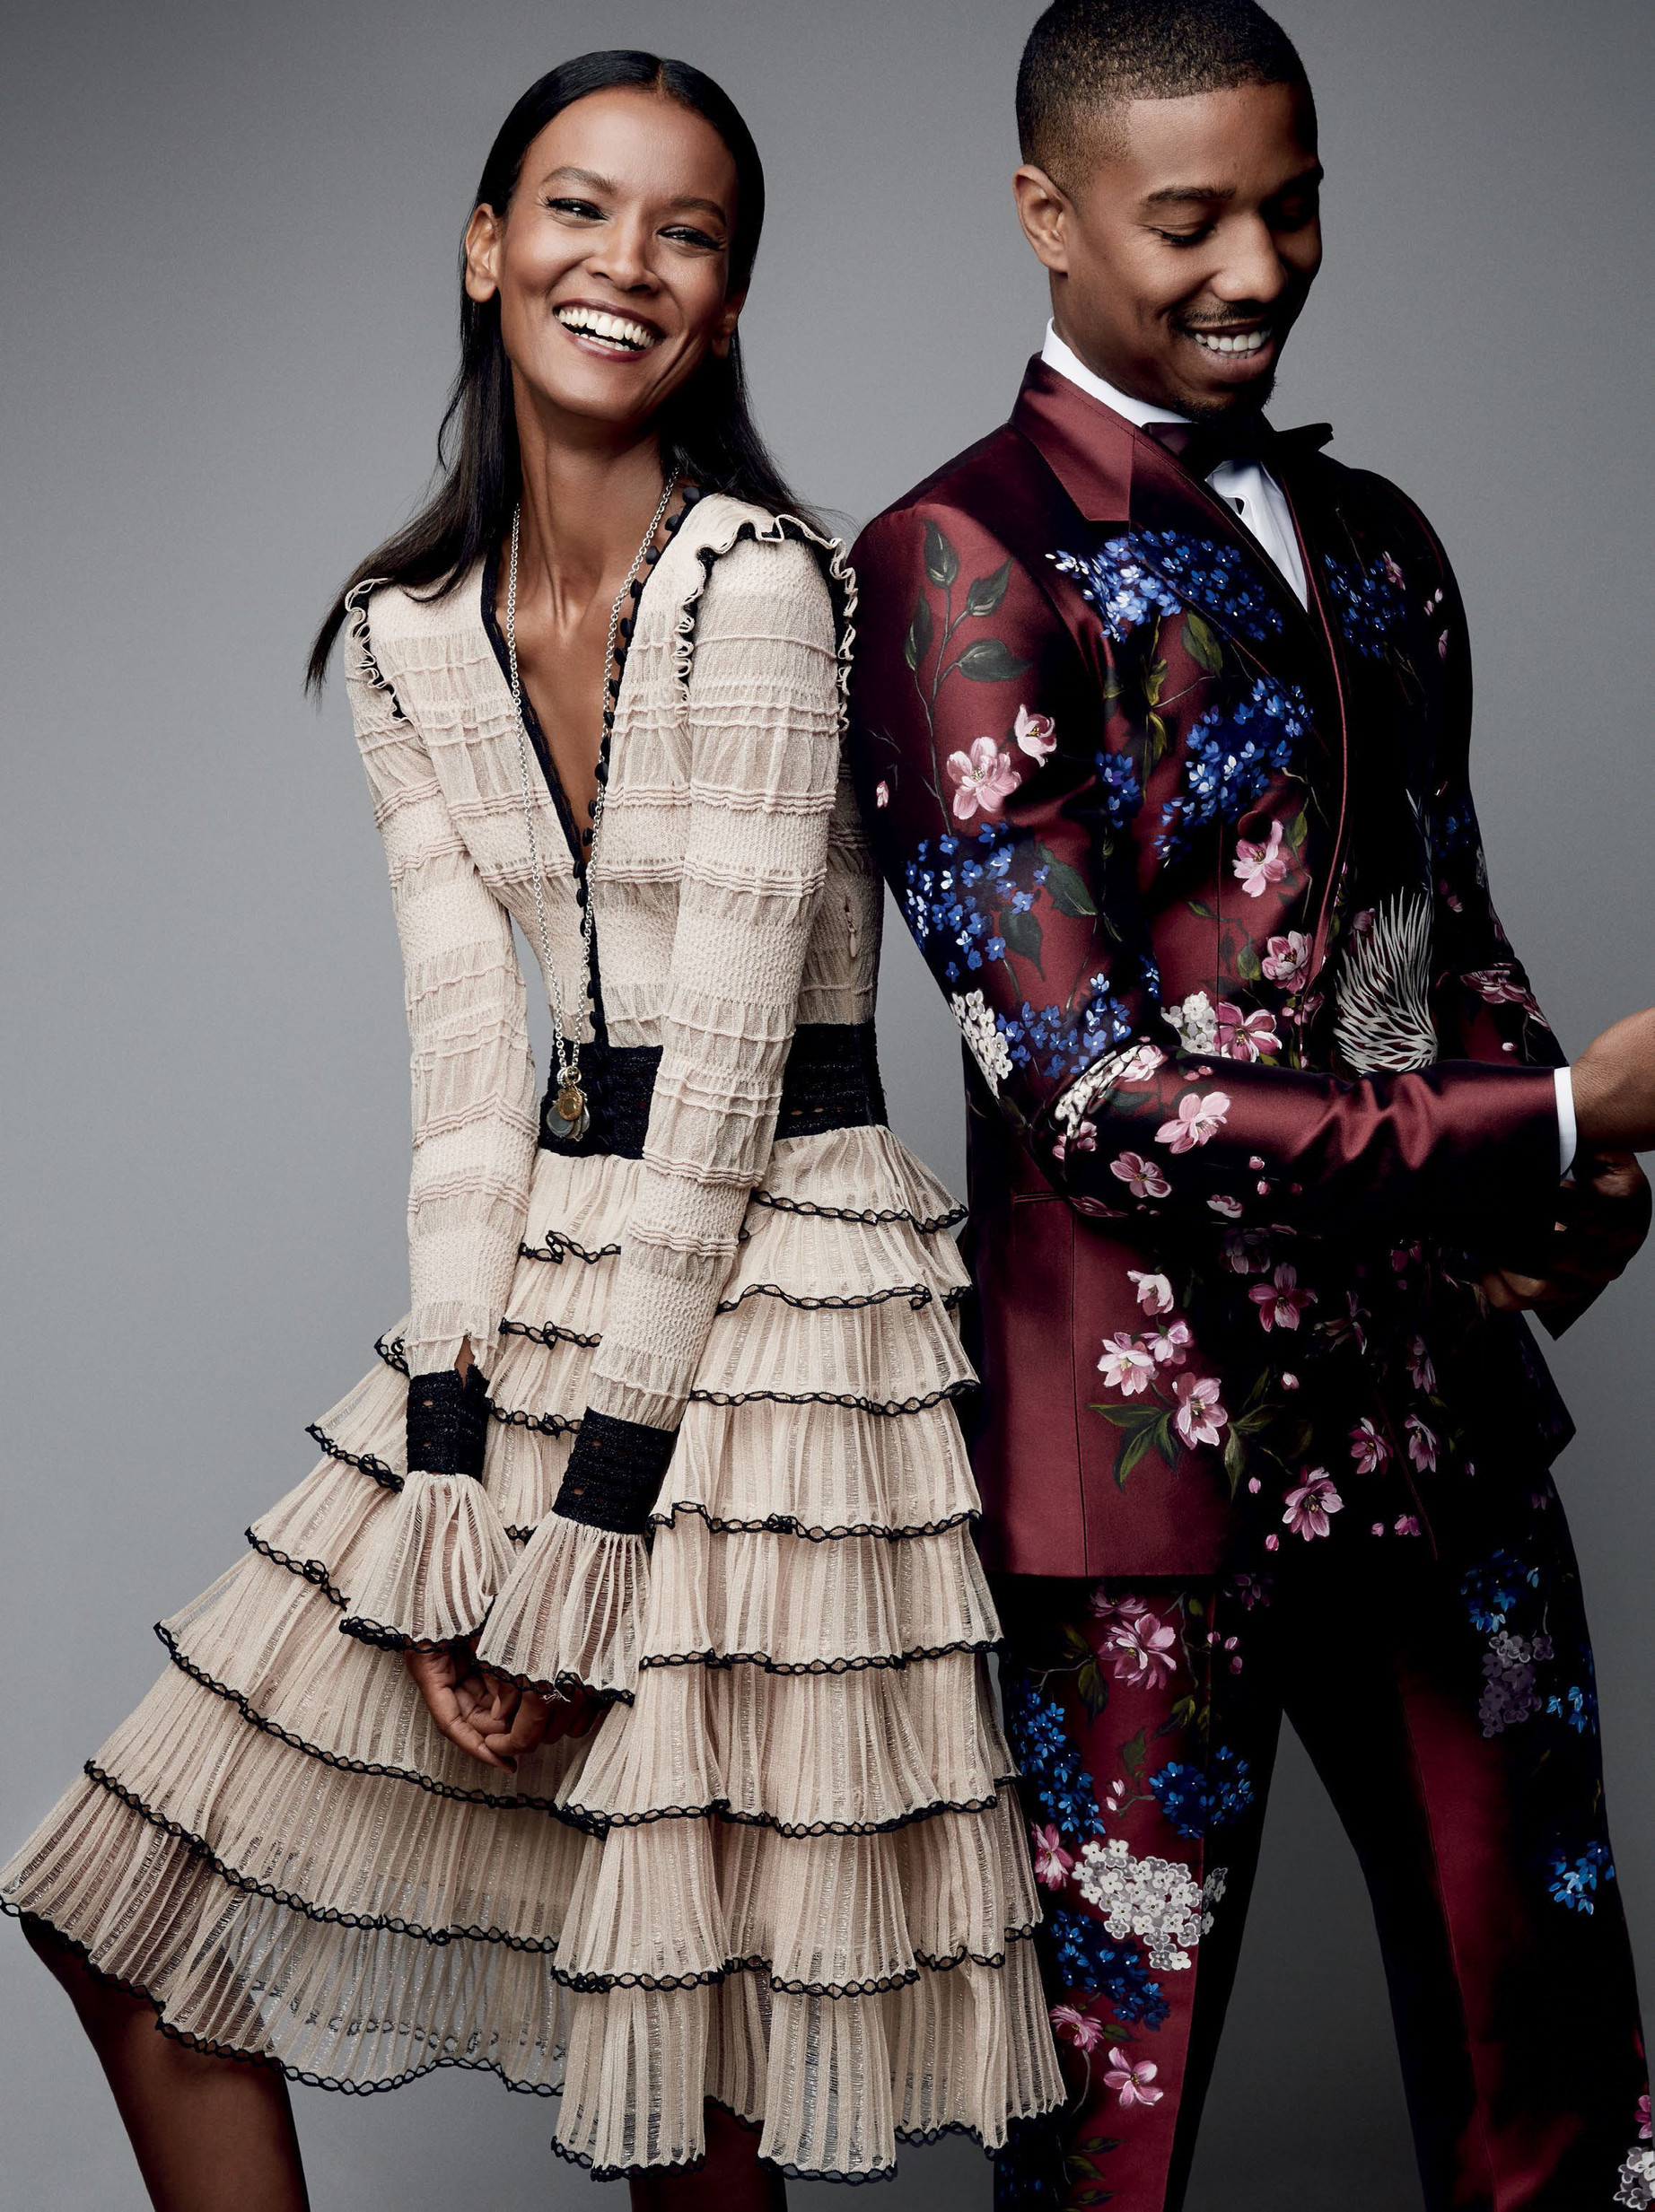 Michael B Jordan Goes Dandy for Vogue Photo Shoot – The Fashionisto